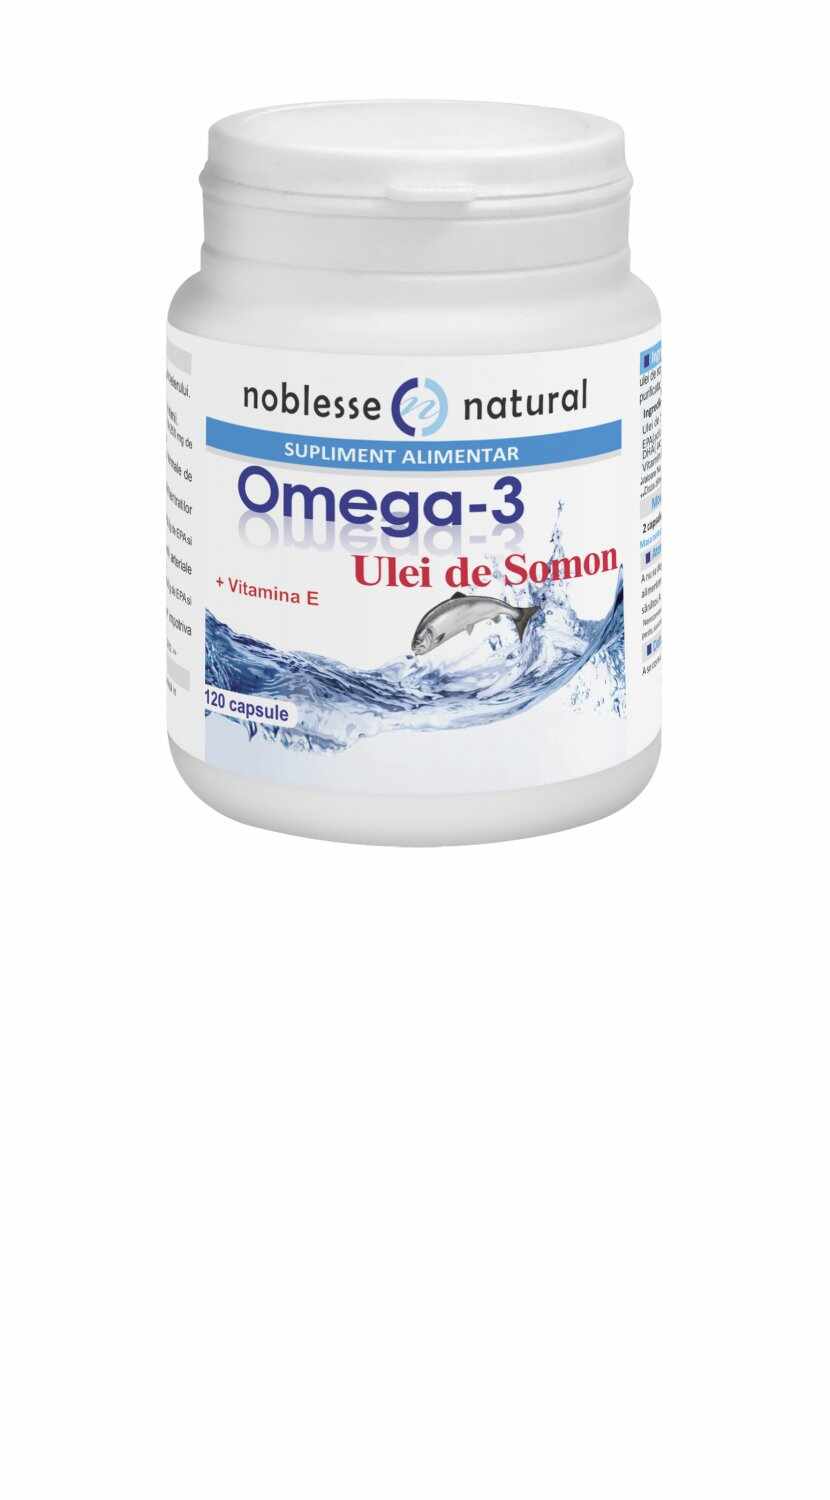 Noblesse Natural, Omega 3 - Ulei de somon 1000 mg + Vitamina E, 120 capsule